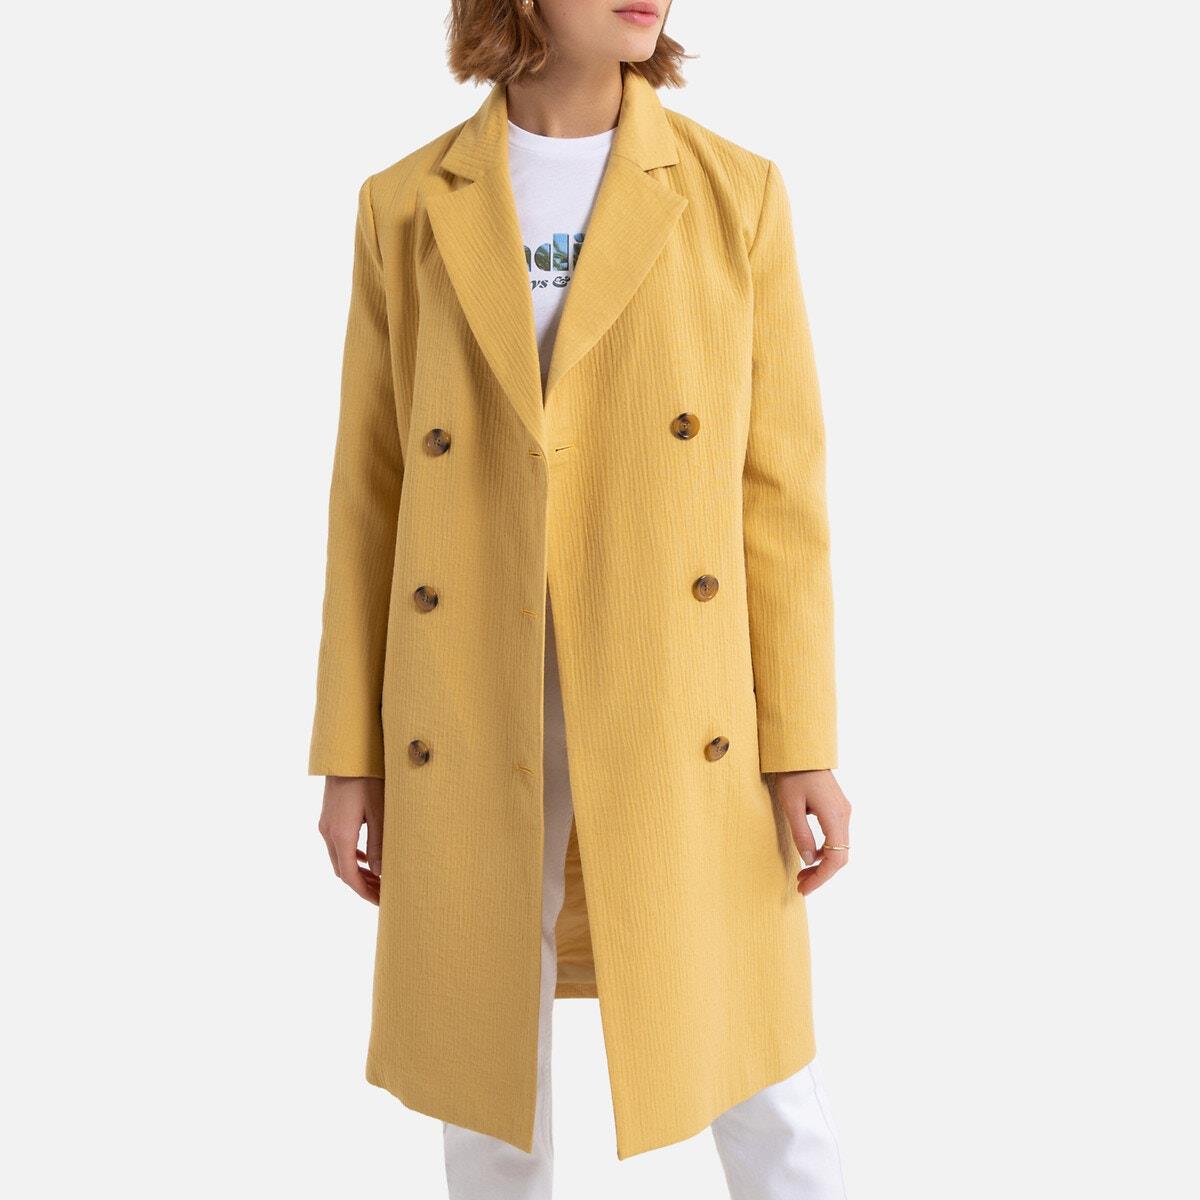 Abrigo amarillo de La redoute